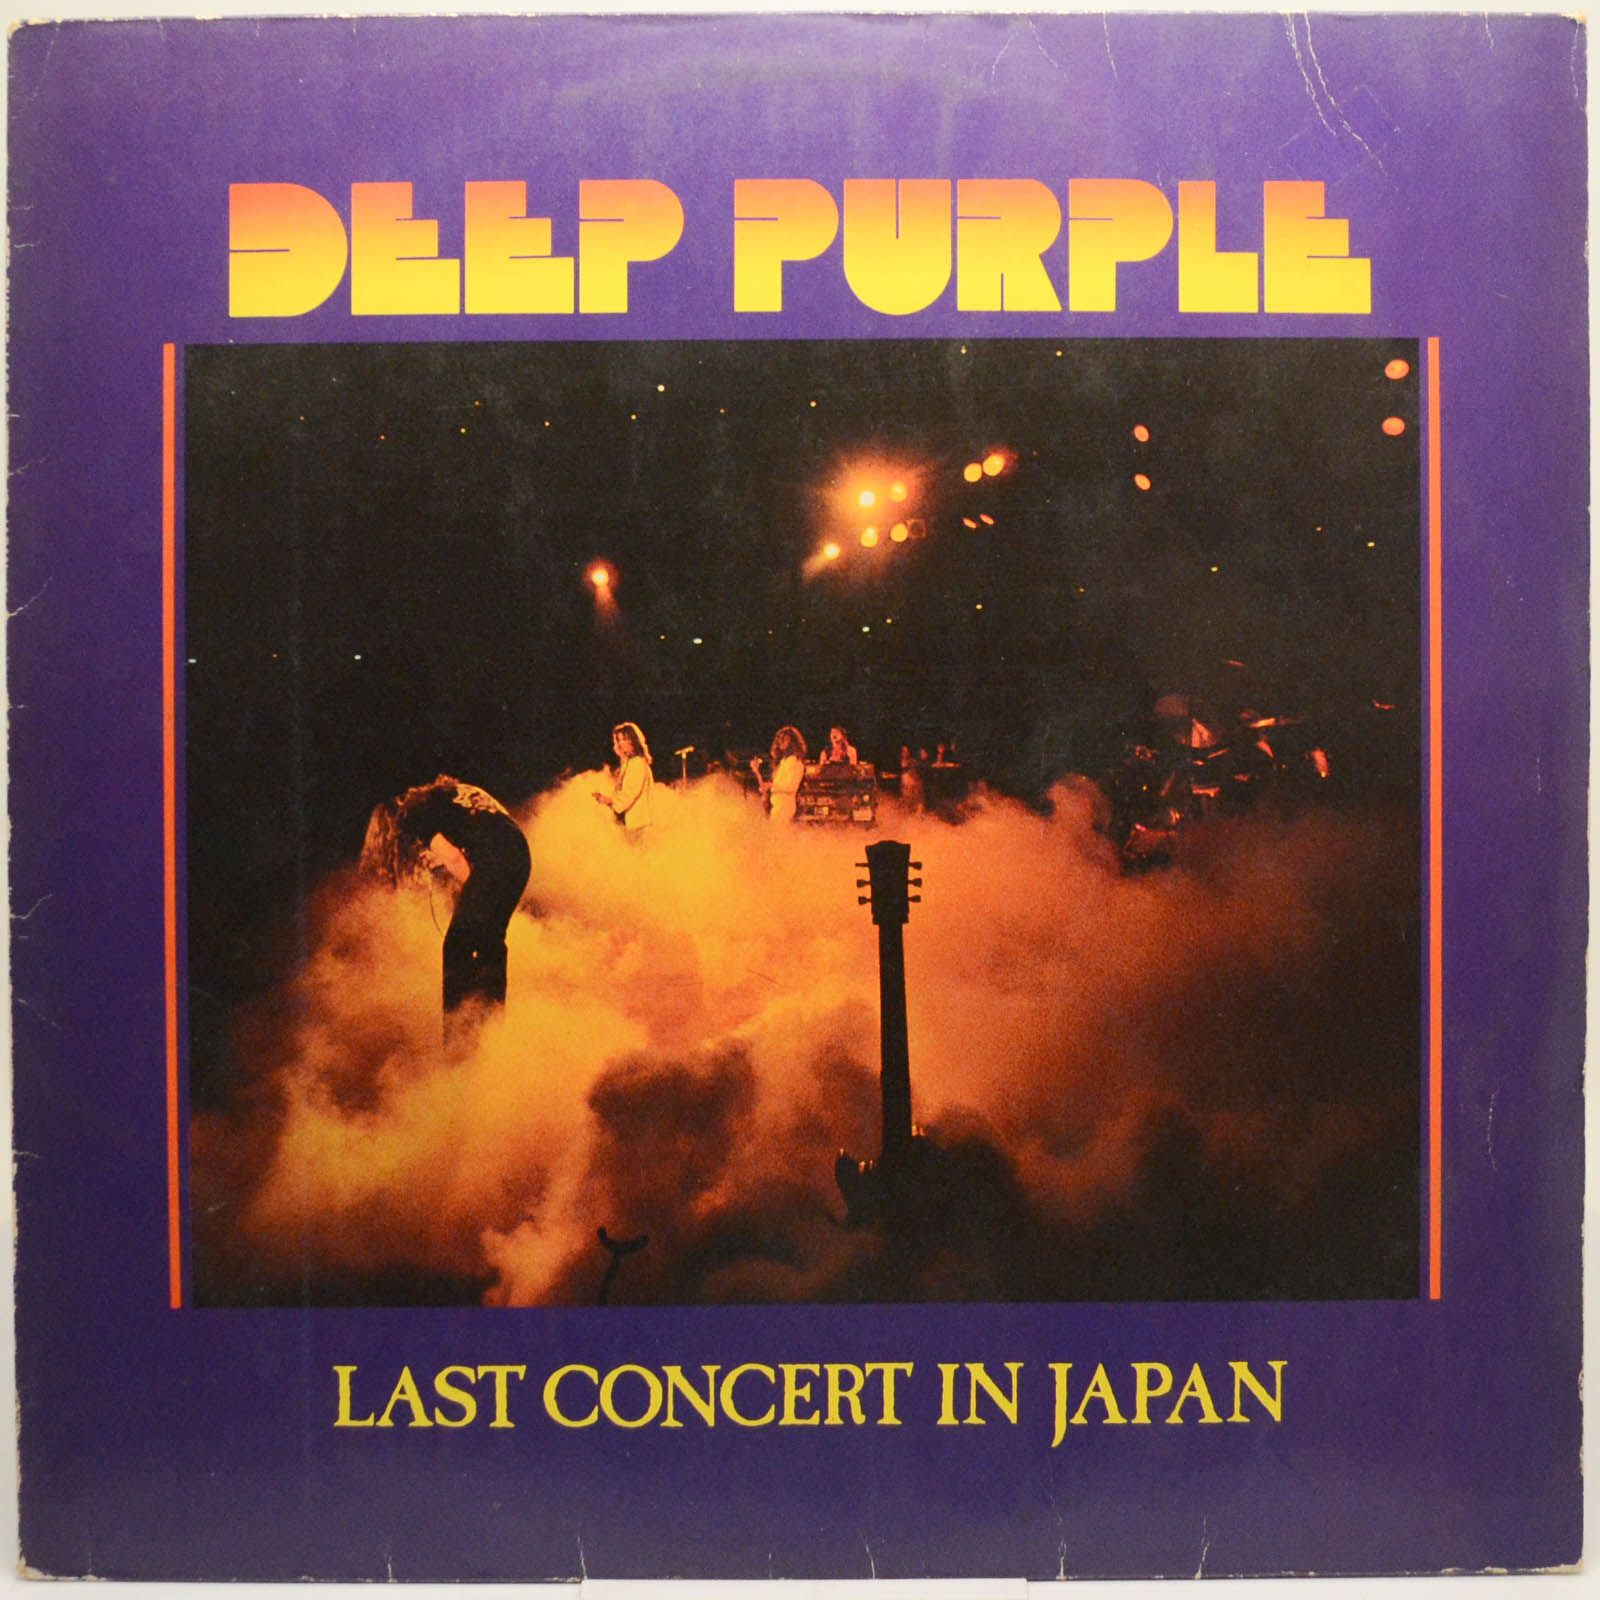 Deep Purple — Last Concert In Japan, 1978